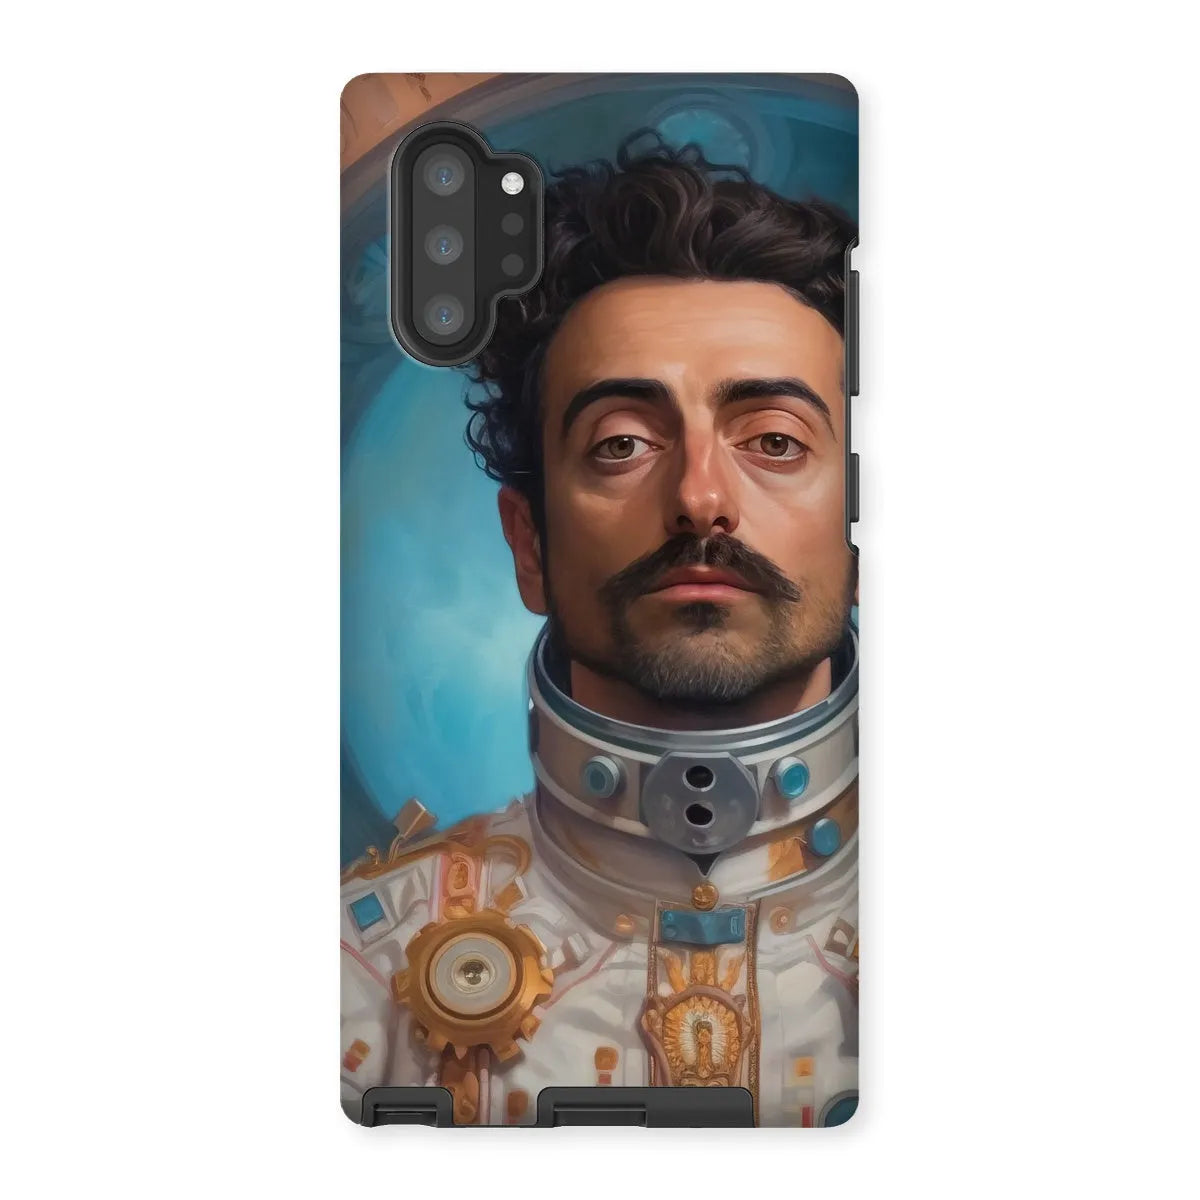 Eskandar The Gay Astronaut - Gay Aesthetic Art Phone Case - Samsung Galaxy Note 10p / Matte - Mobile Phone Cases